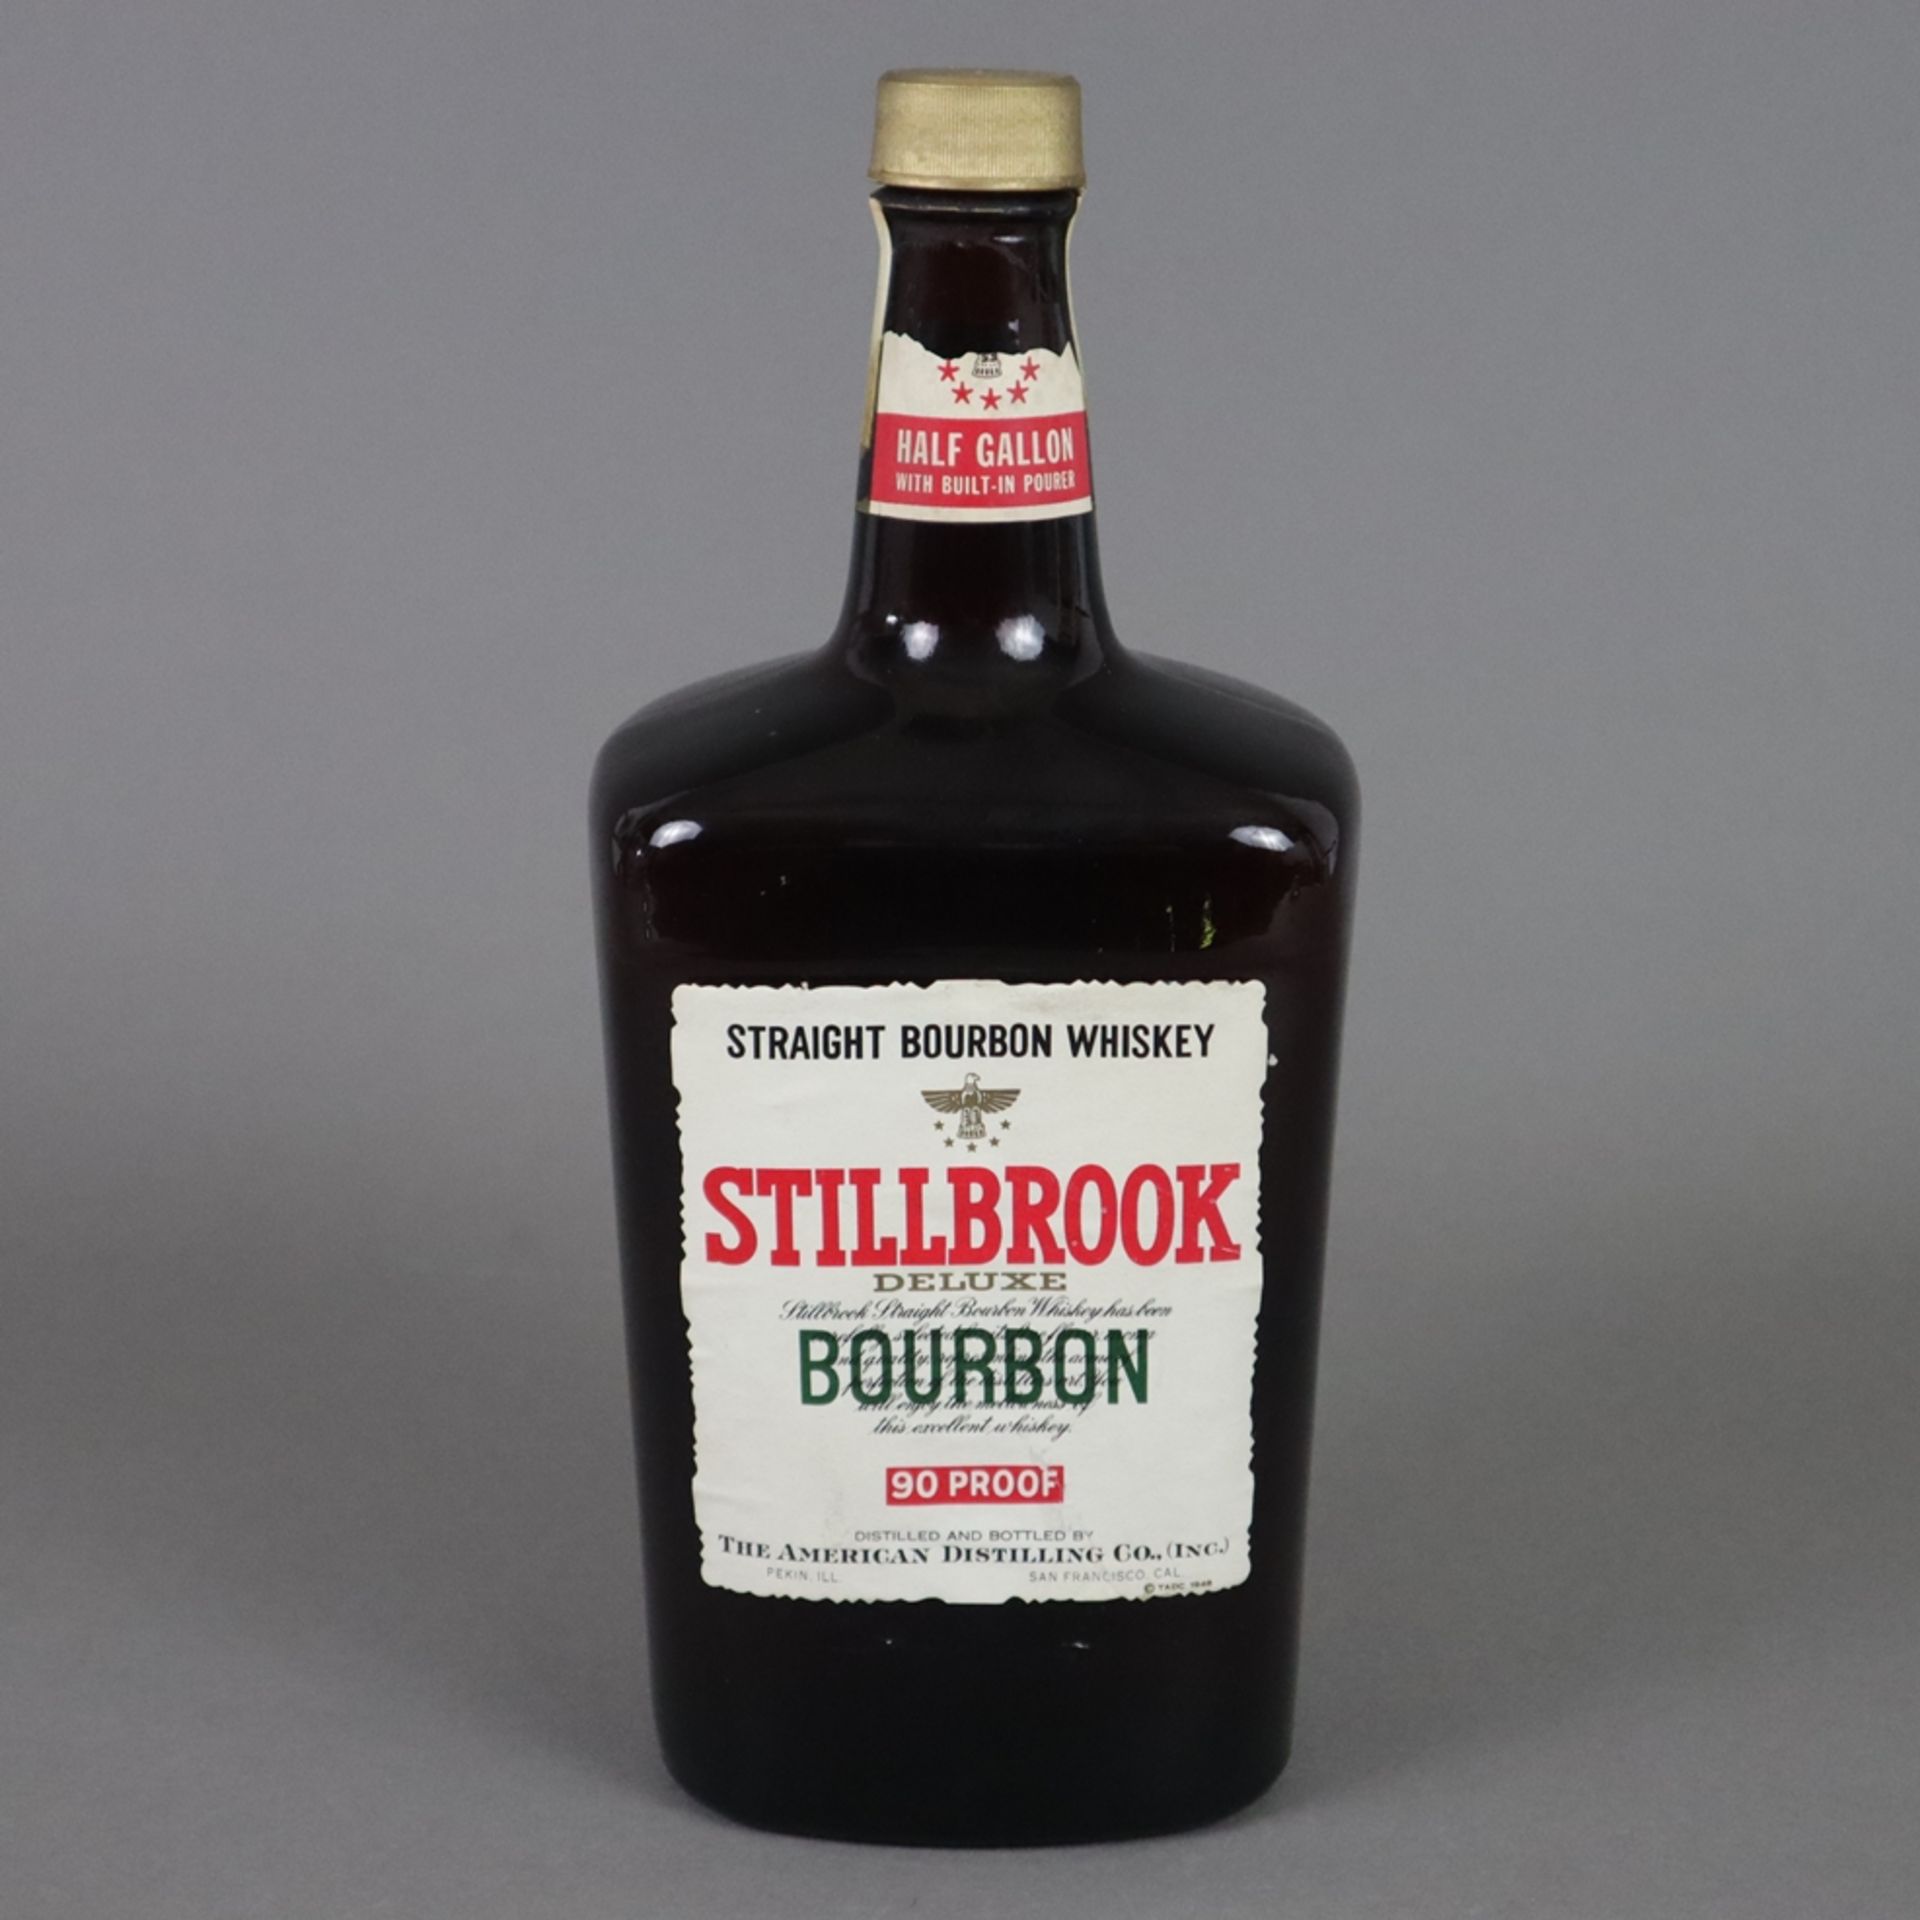 Whiskey - Stillbrook - Straight Bourbon Whiskey Deluxe 90 Proof, Half-Gallon (1,89 l), 45%, Siegel